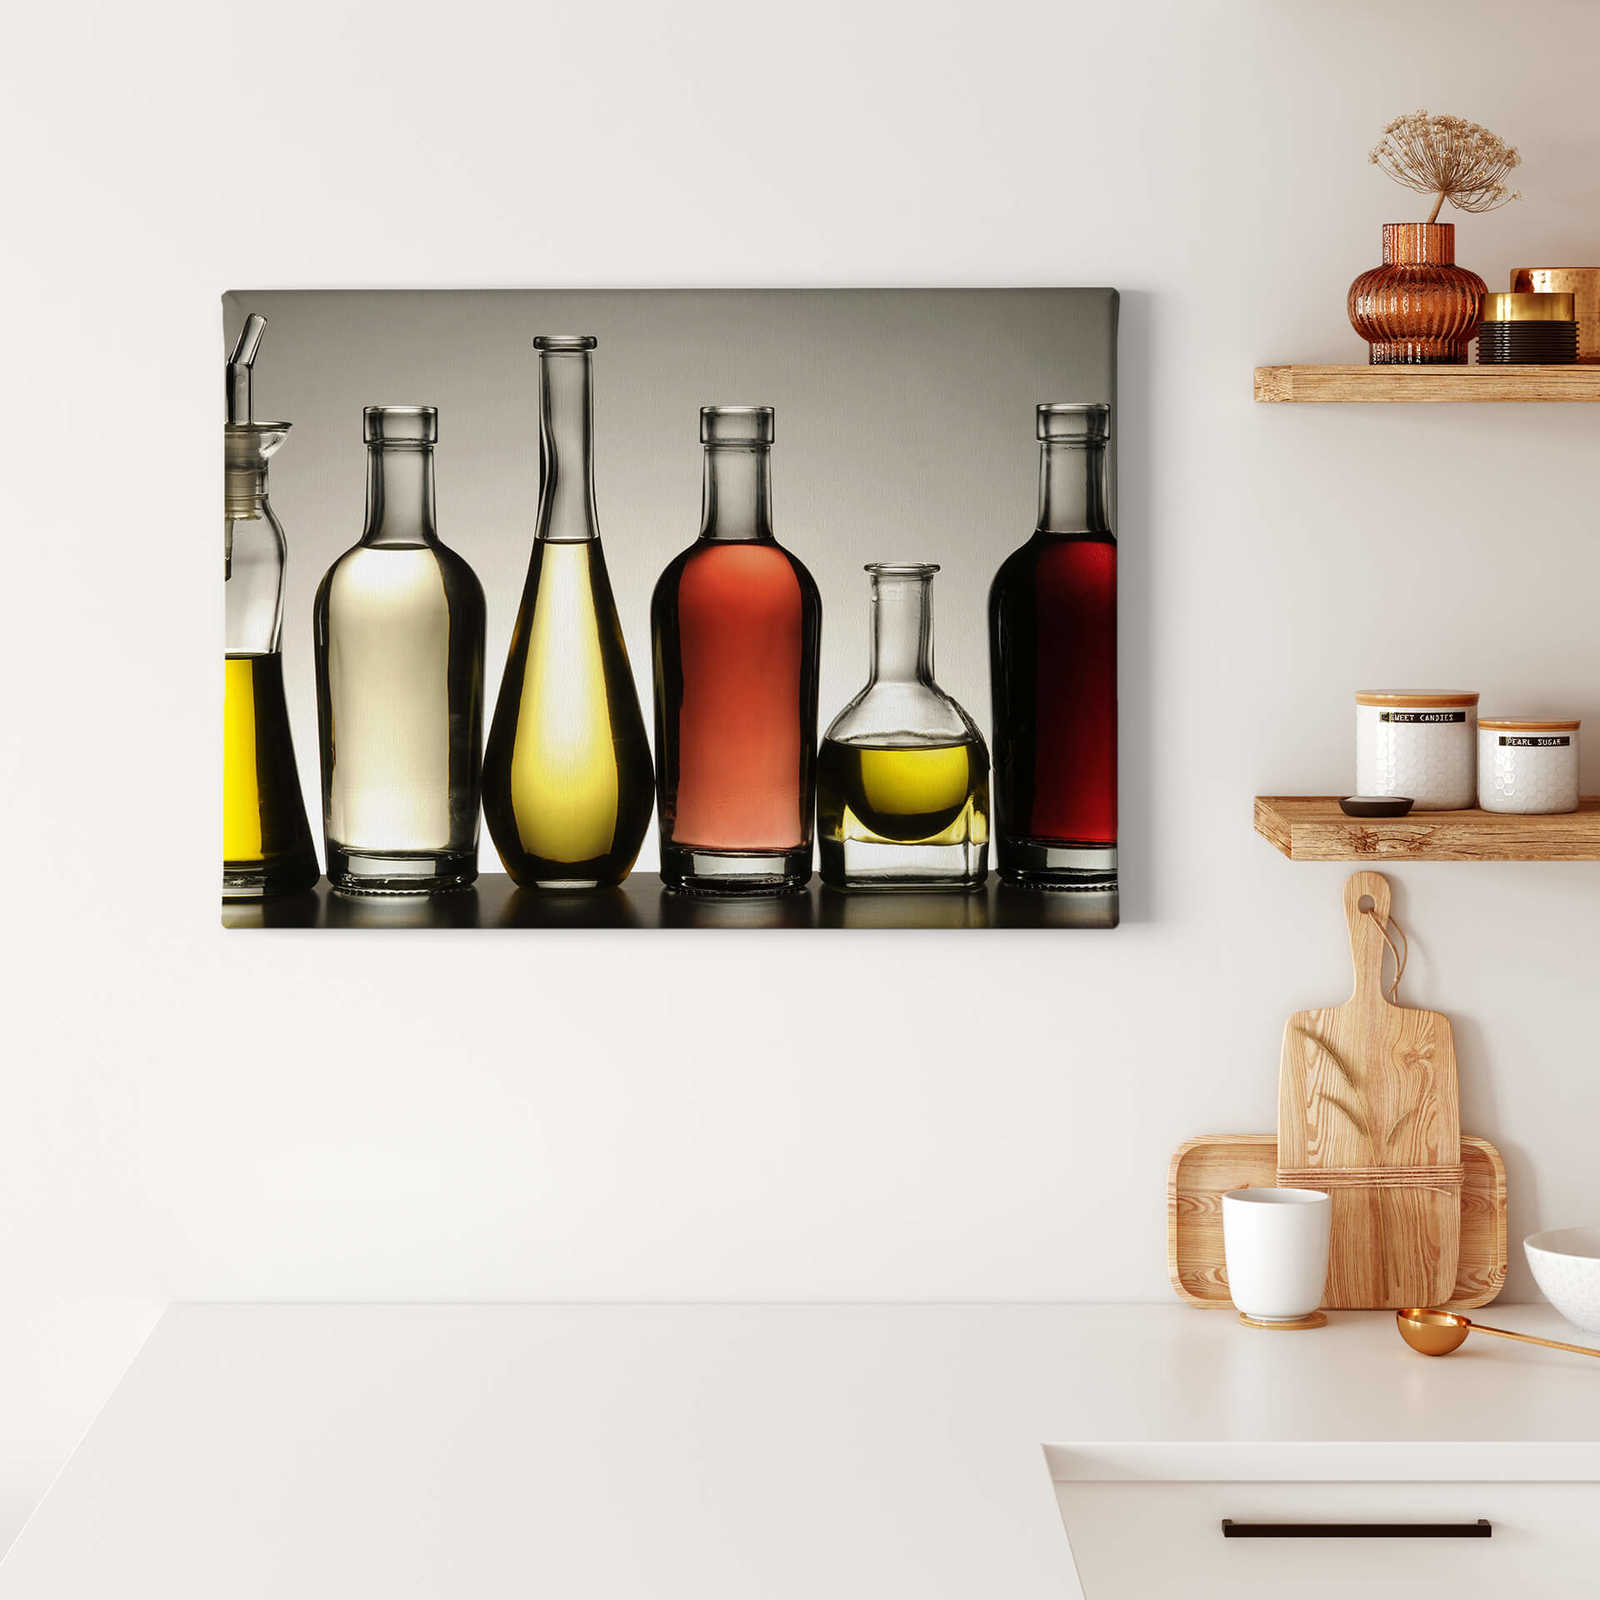             Cocina Lienzo pintura Botellas con aceites - 0,70 m x 0,50 m
        